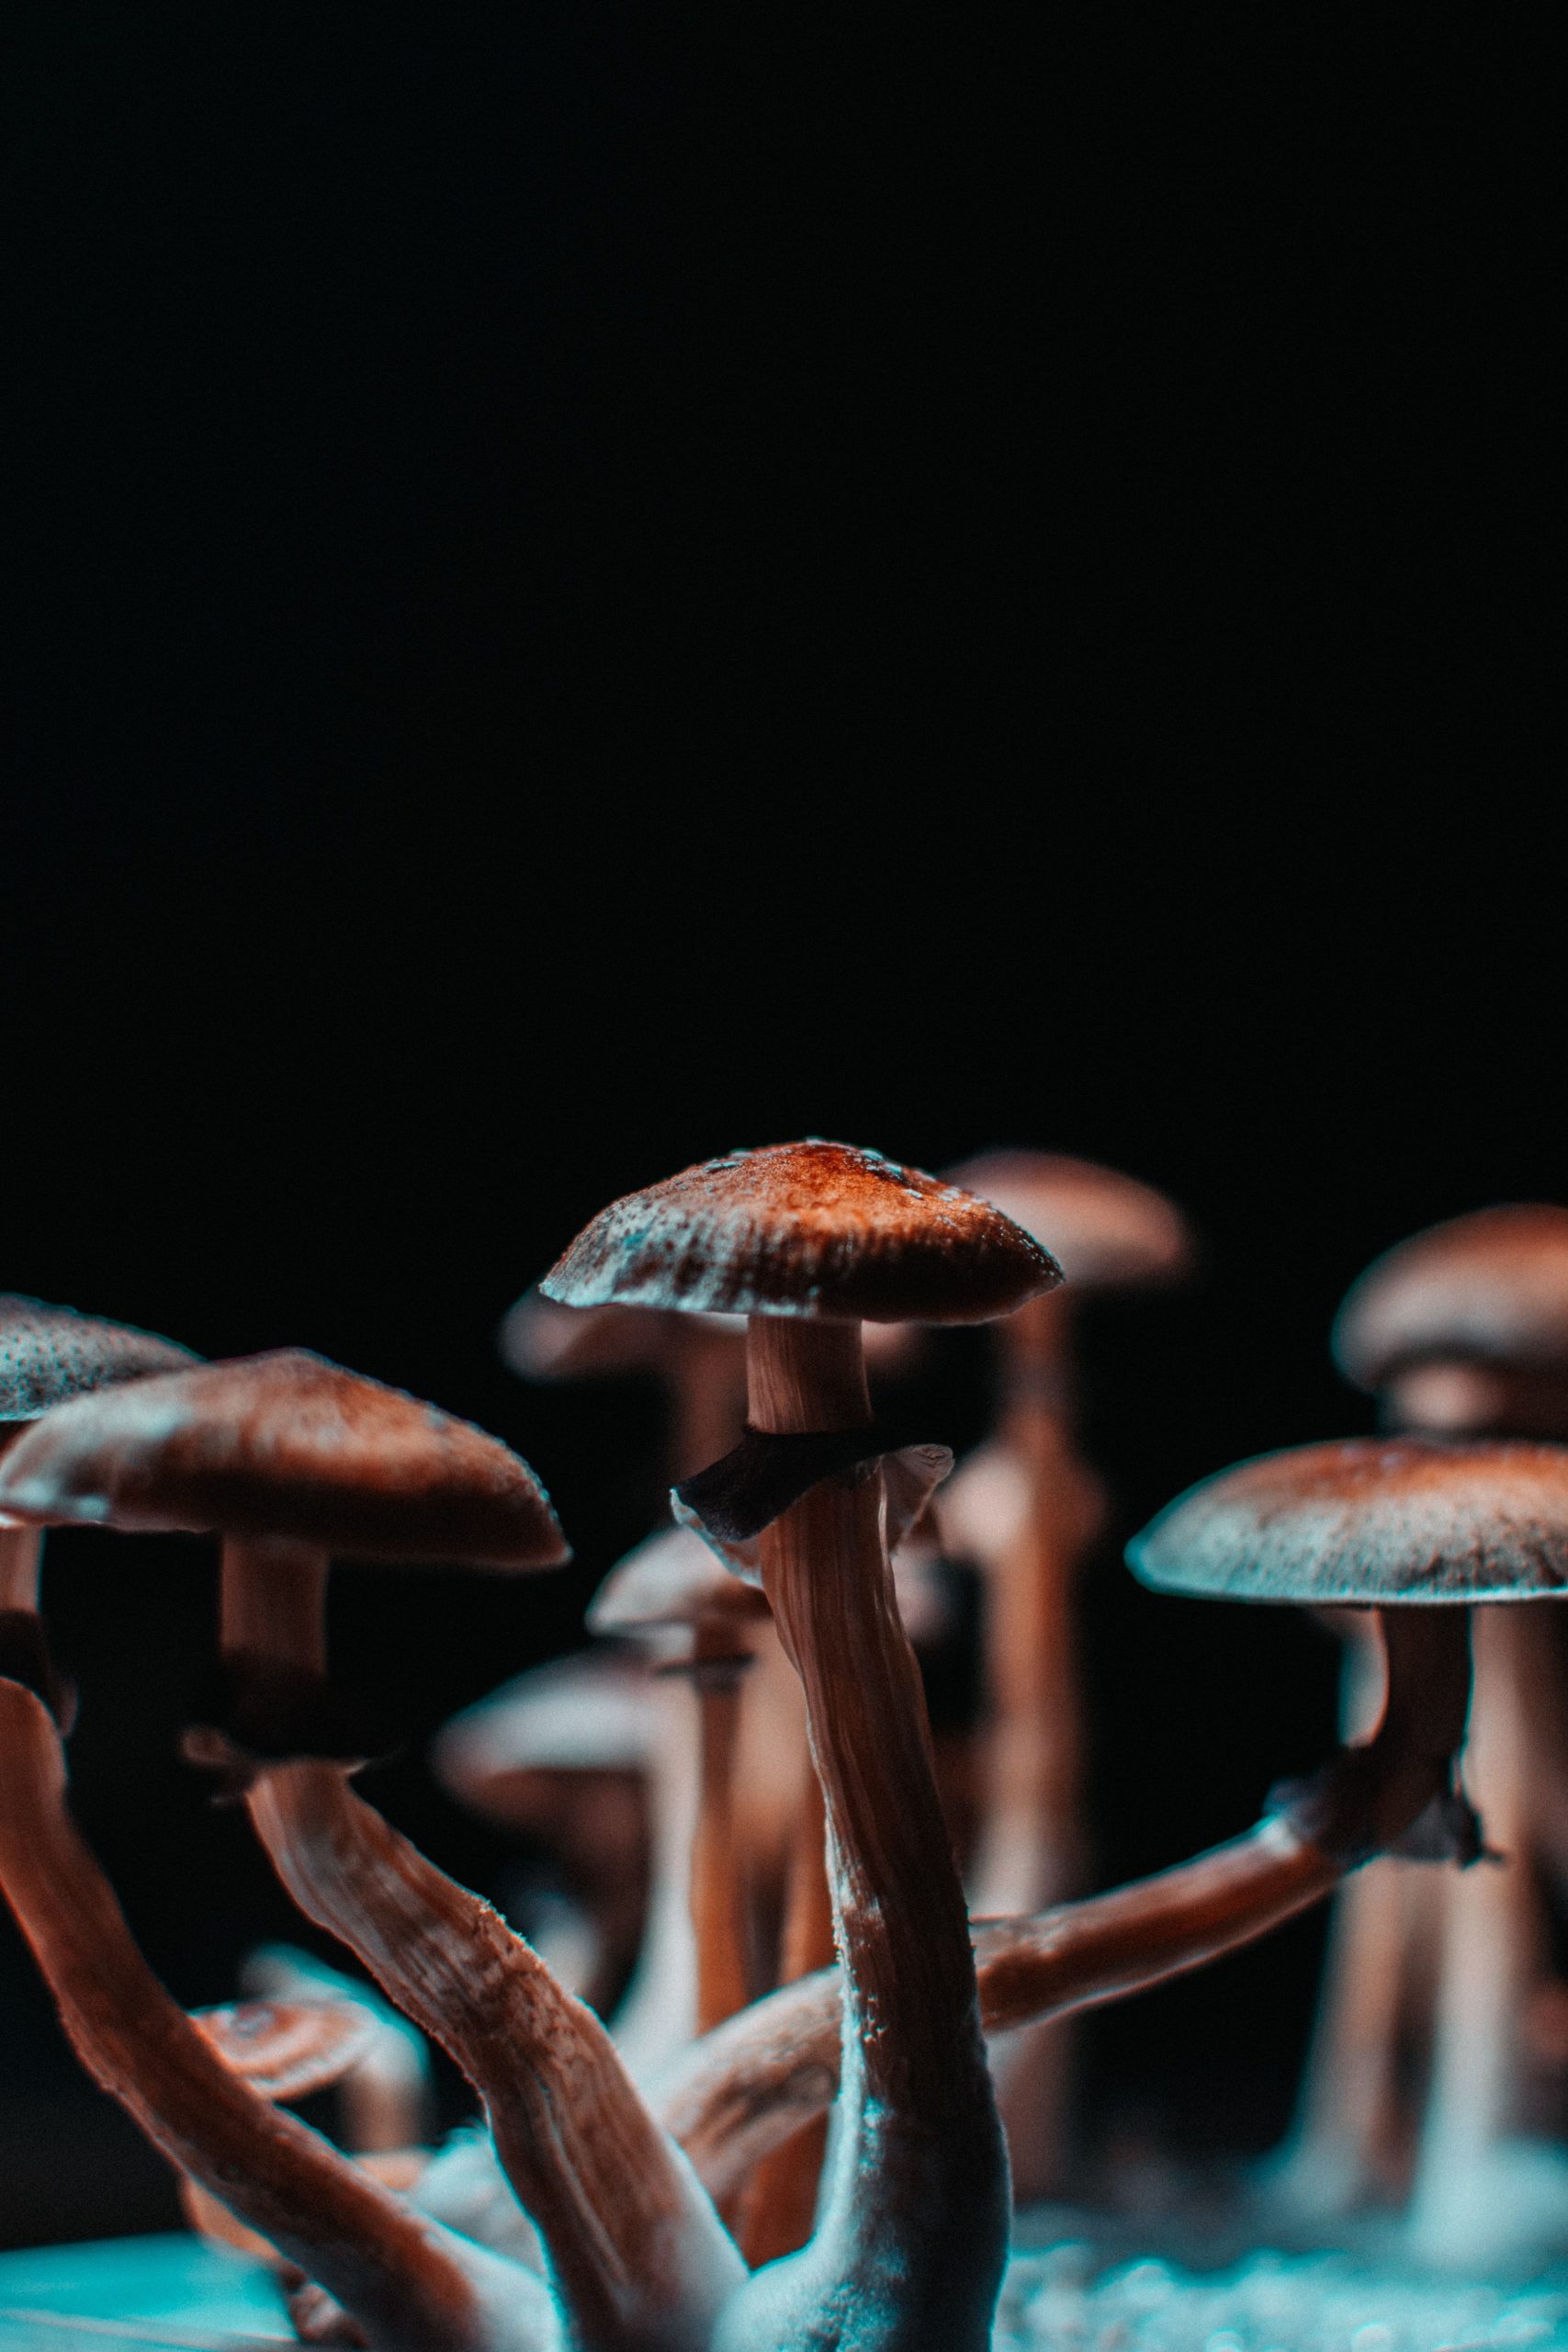 Can magic mushrooms treat depression? Here’s what studies say